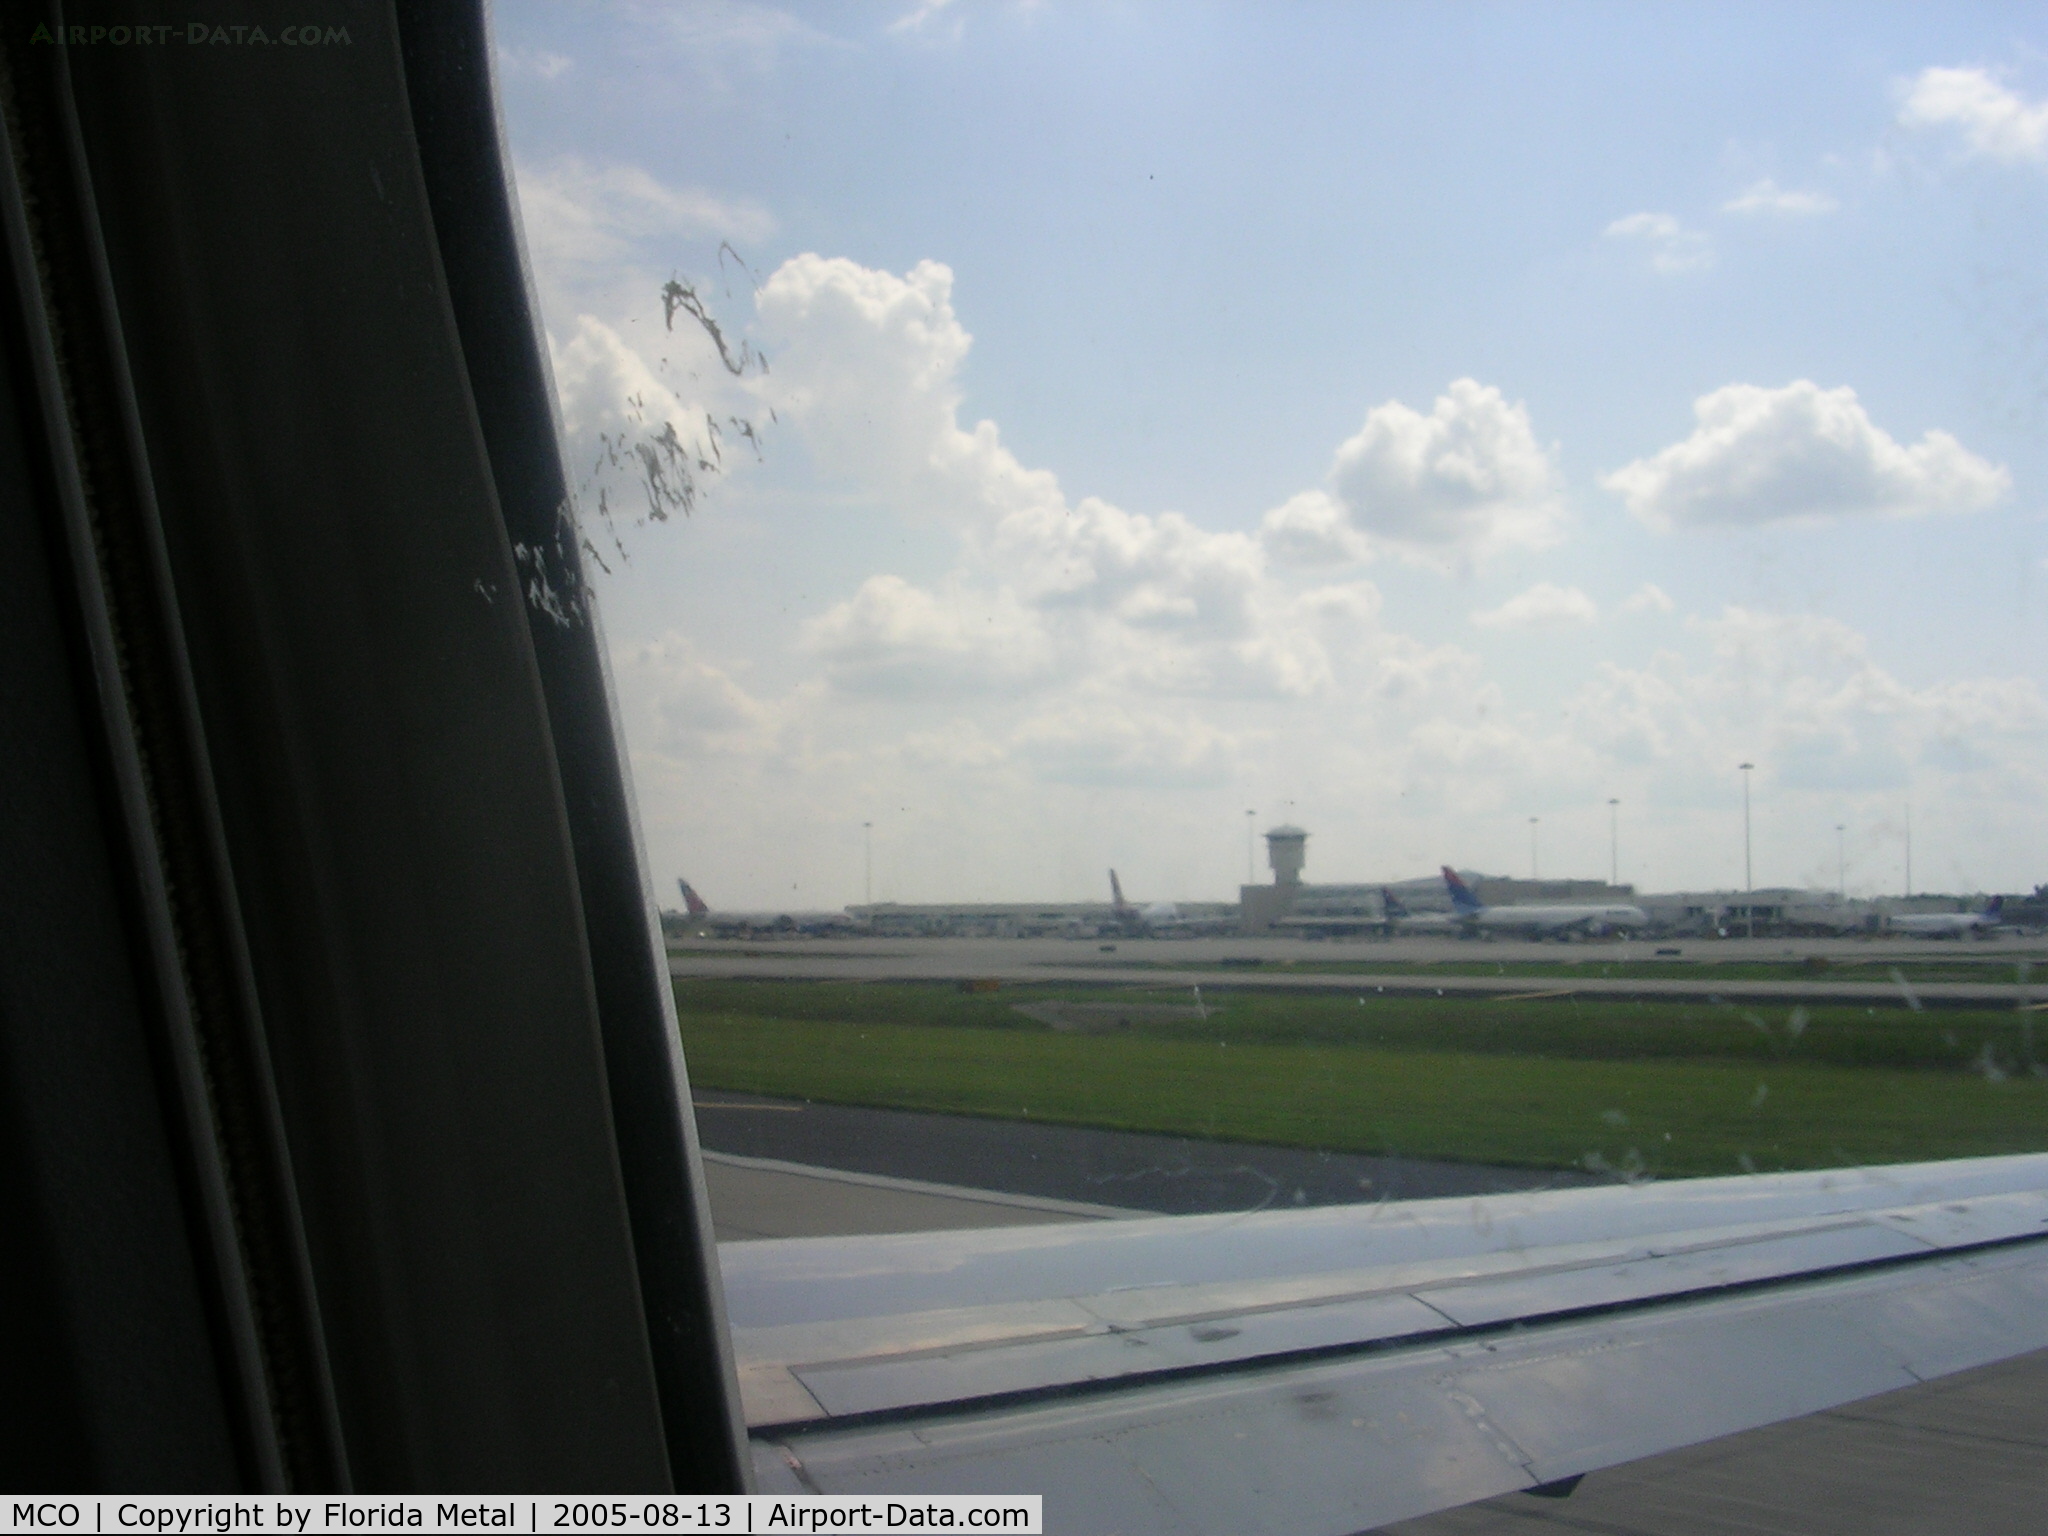 Orlando International Airport (MCO) - Taking off in Orlando